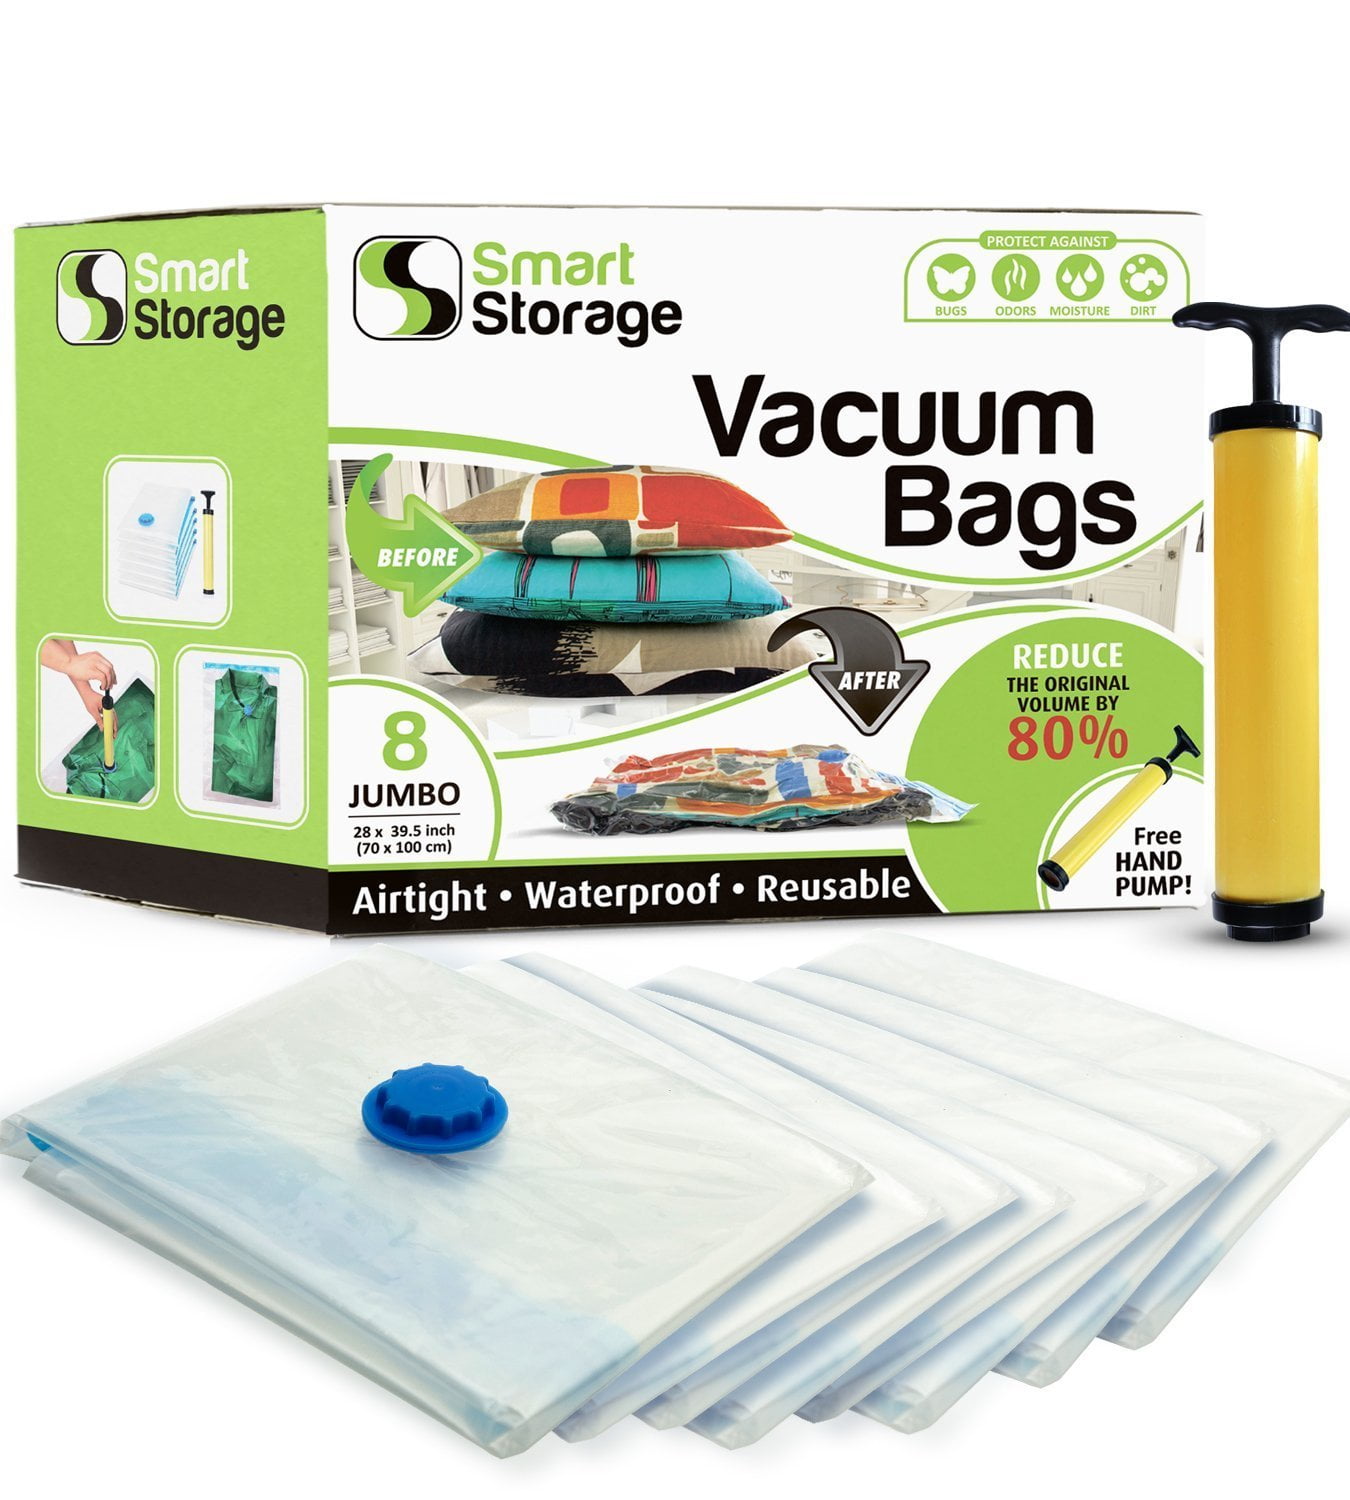 Details about   Strong Vacuum Storage Space Saving Bags Vac Bag Space Saver Vaccum Vacum Bag 